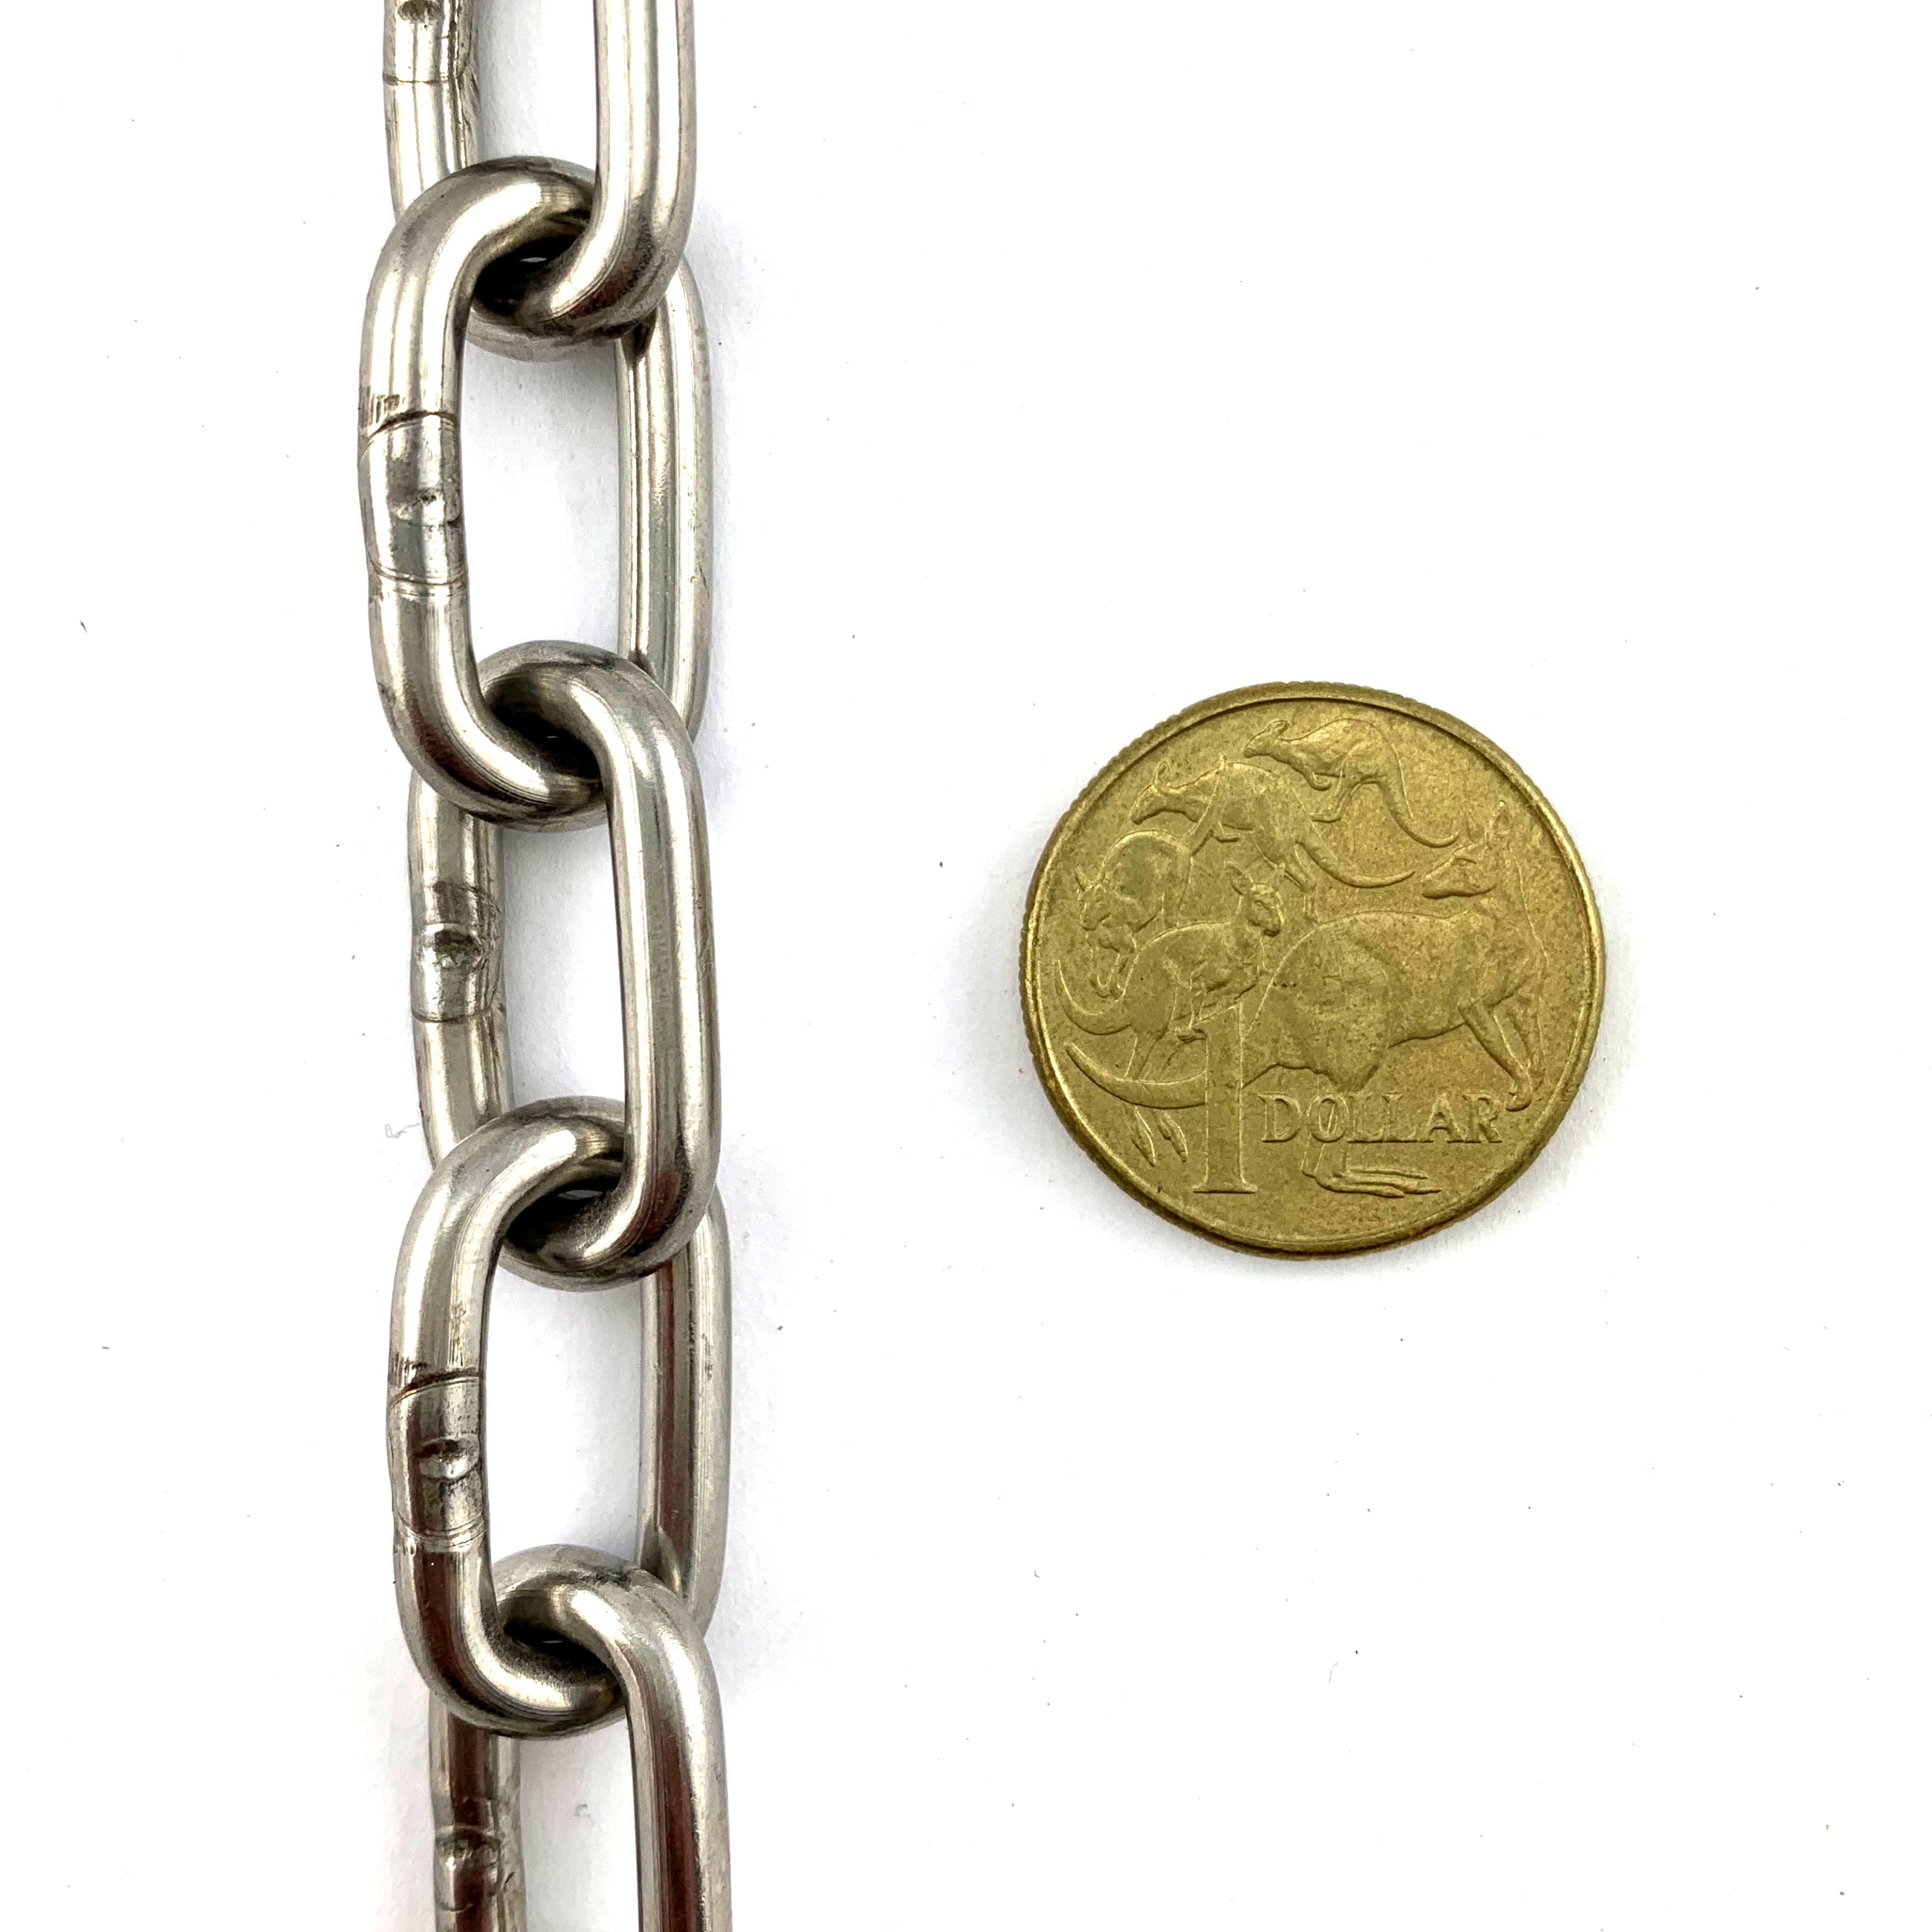 4mm Welded Link Chain in type 316 Marine Grade Stainless Steel, Melbourne Australia